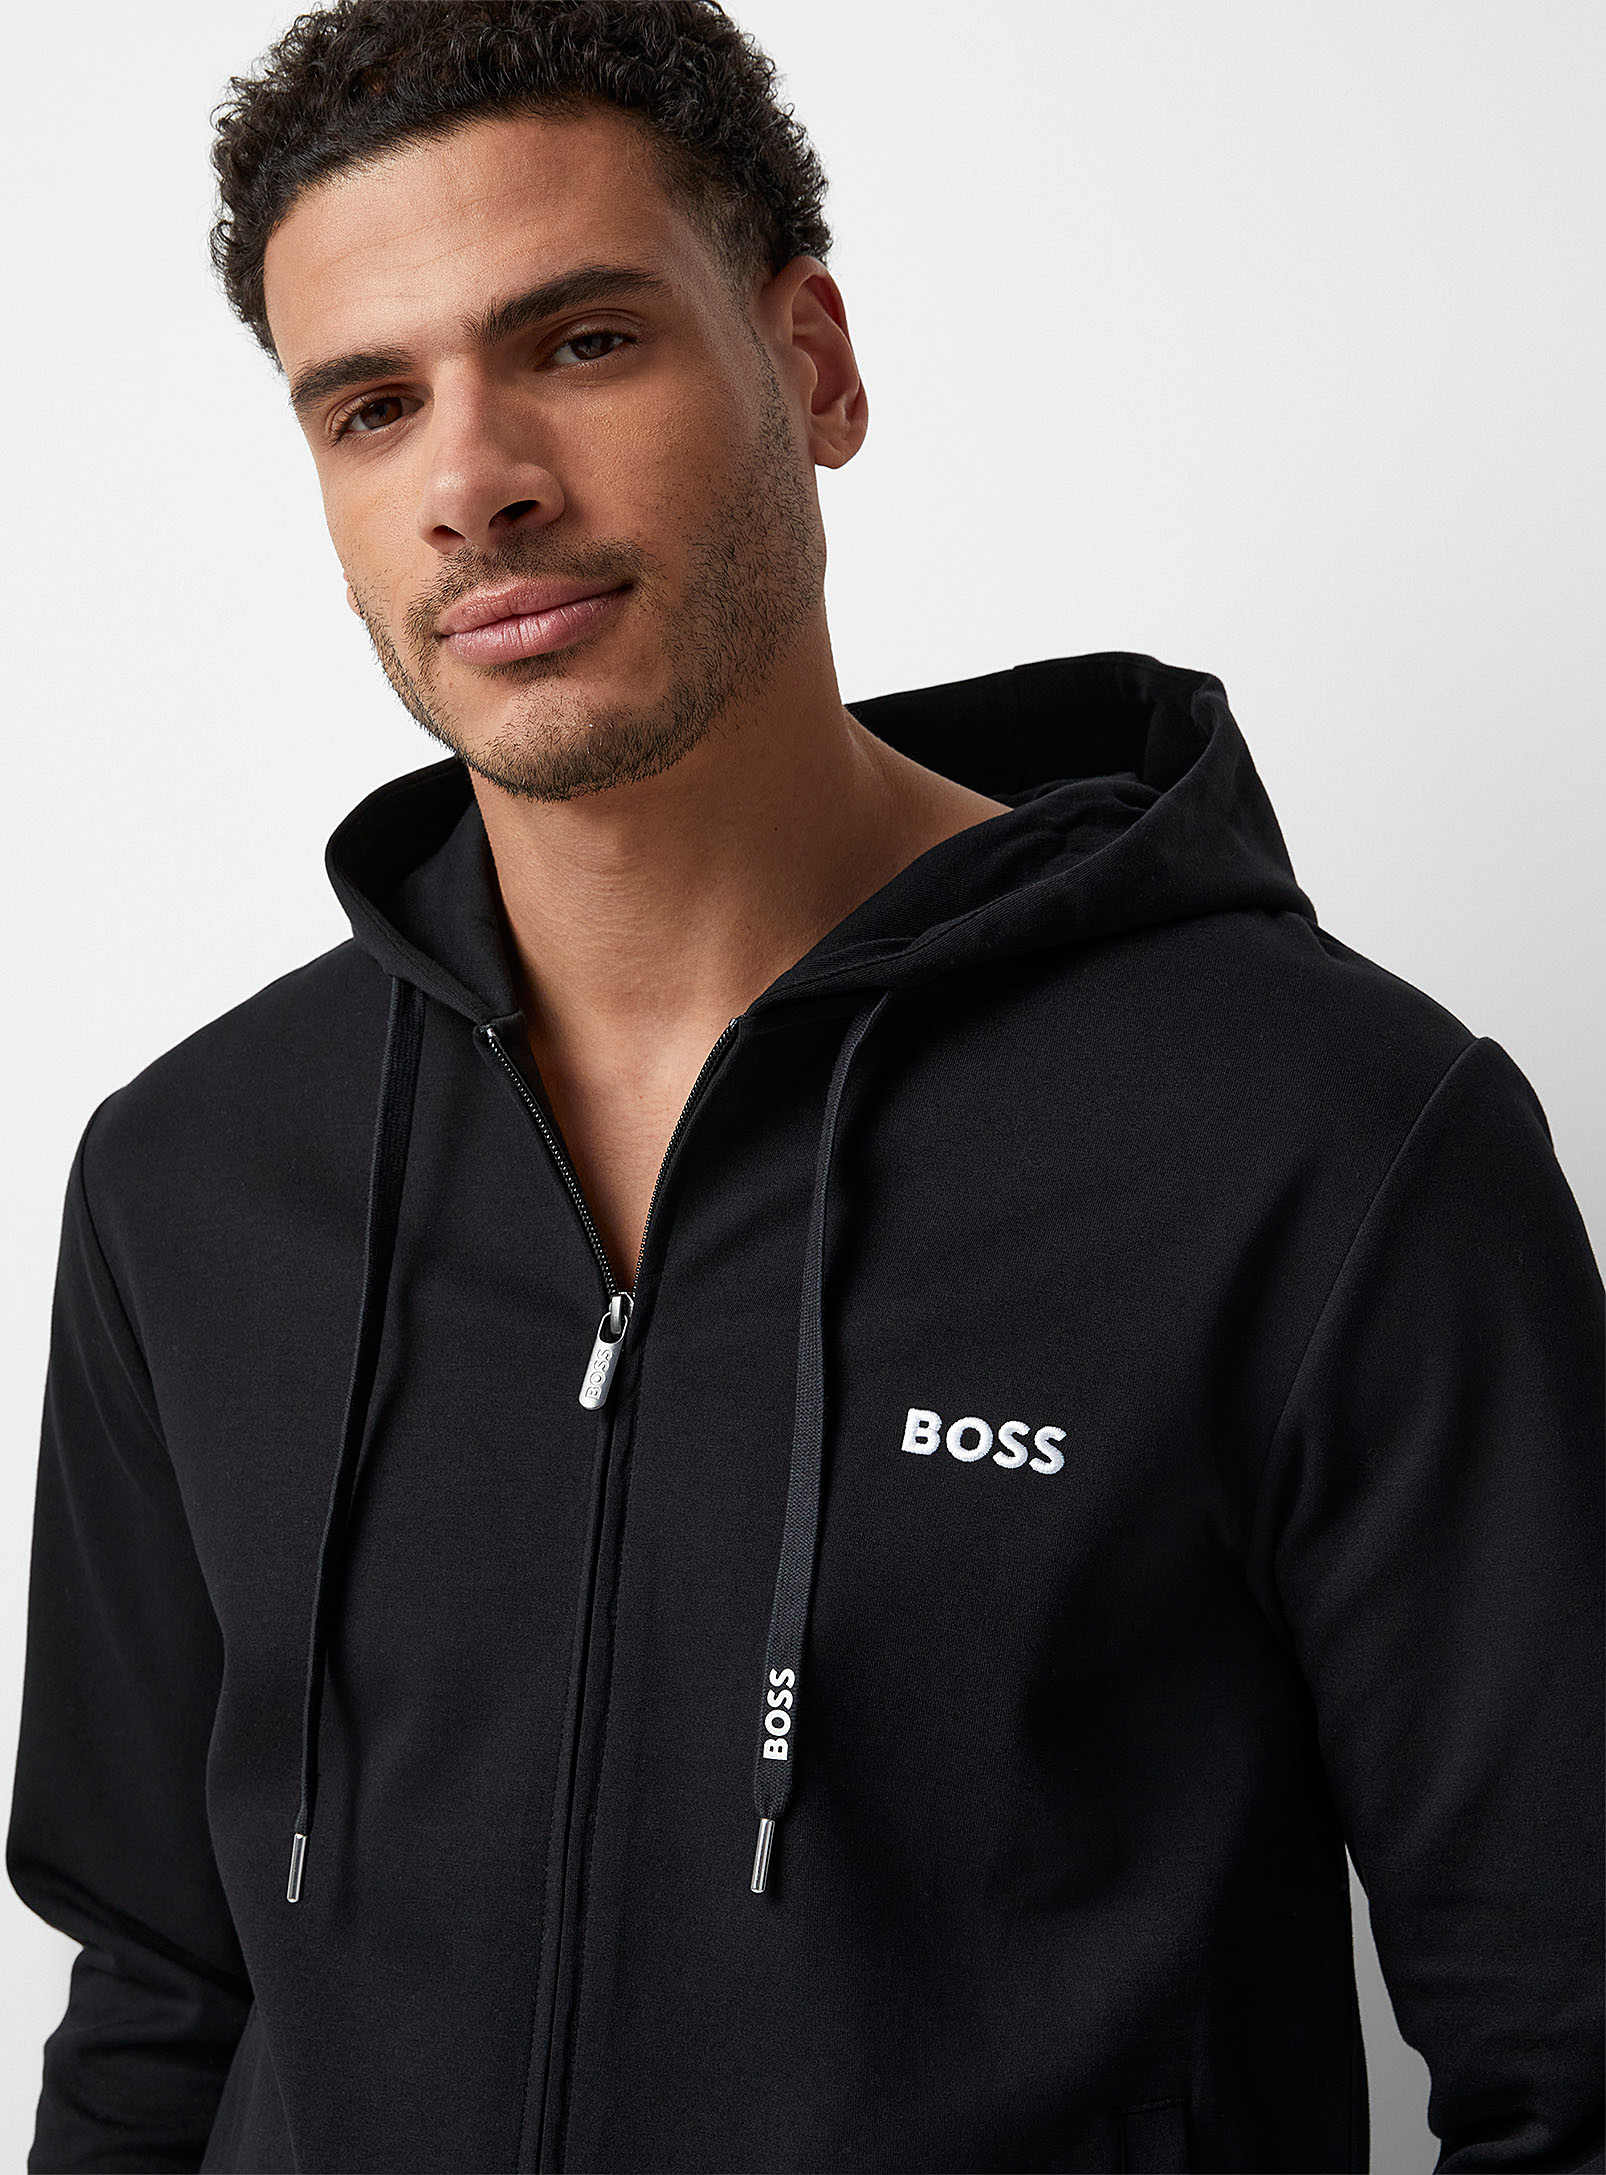 BOSS - Men's Black zip-up lounge hoodie